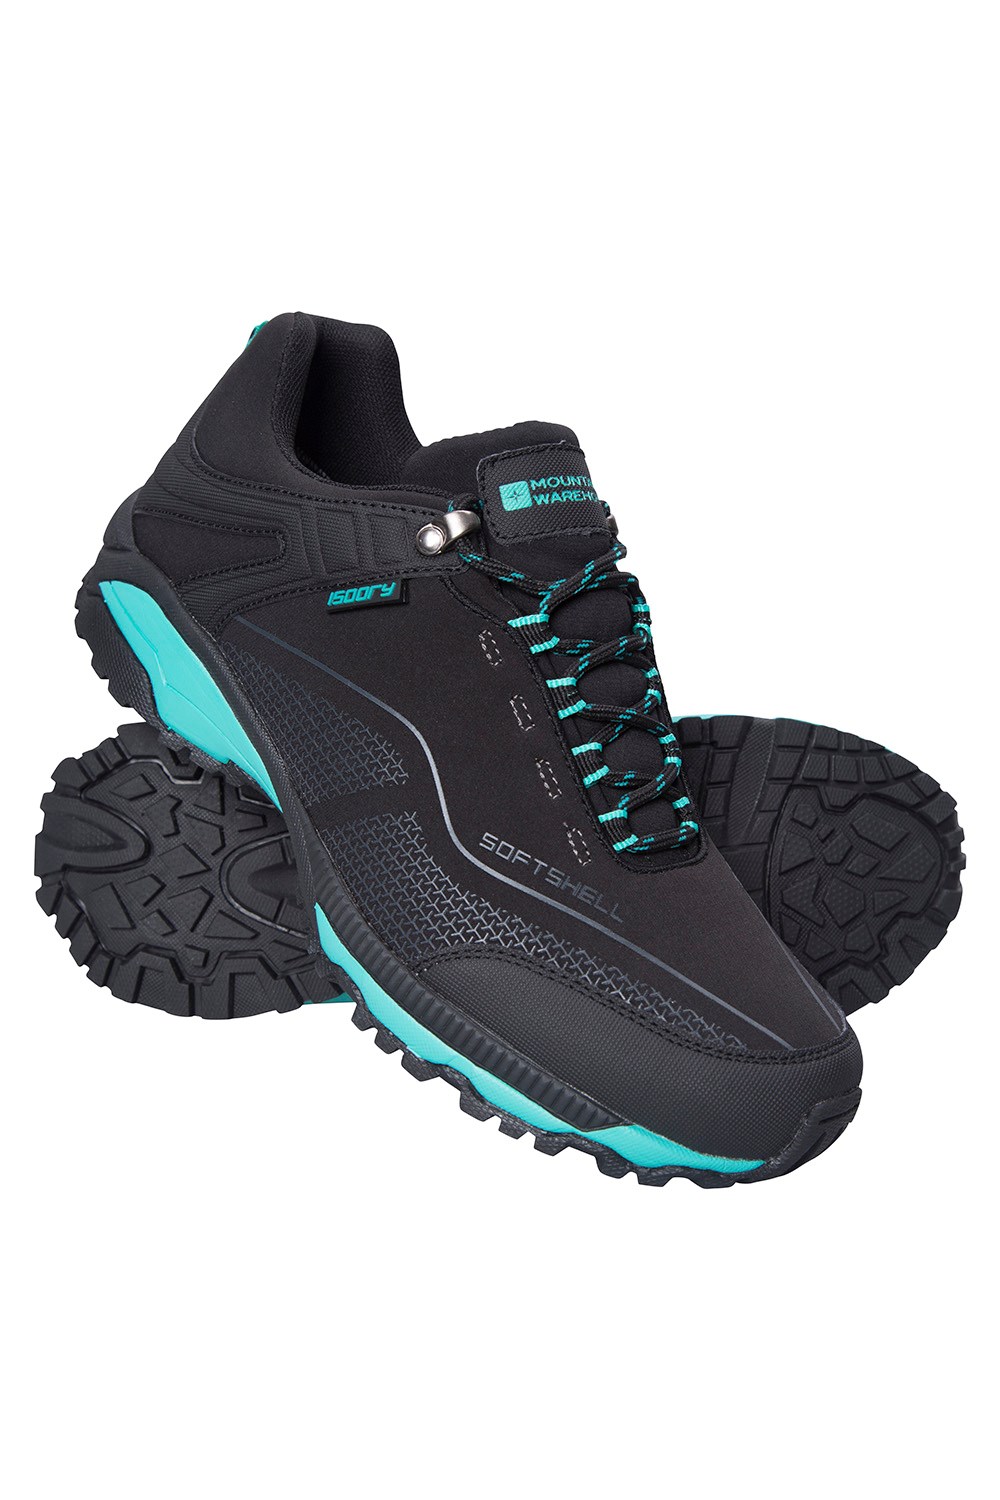 Mountain Warehouse Collie Waterproof Womens Shoes Black